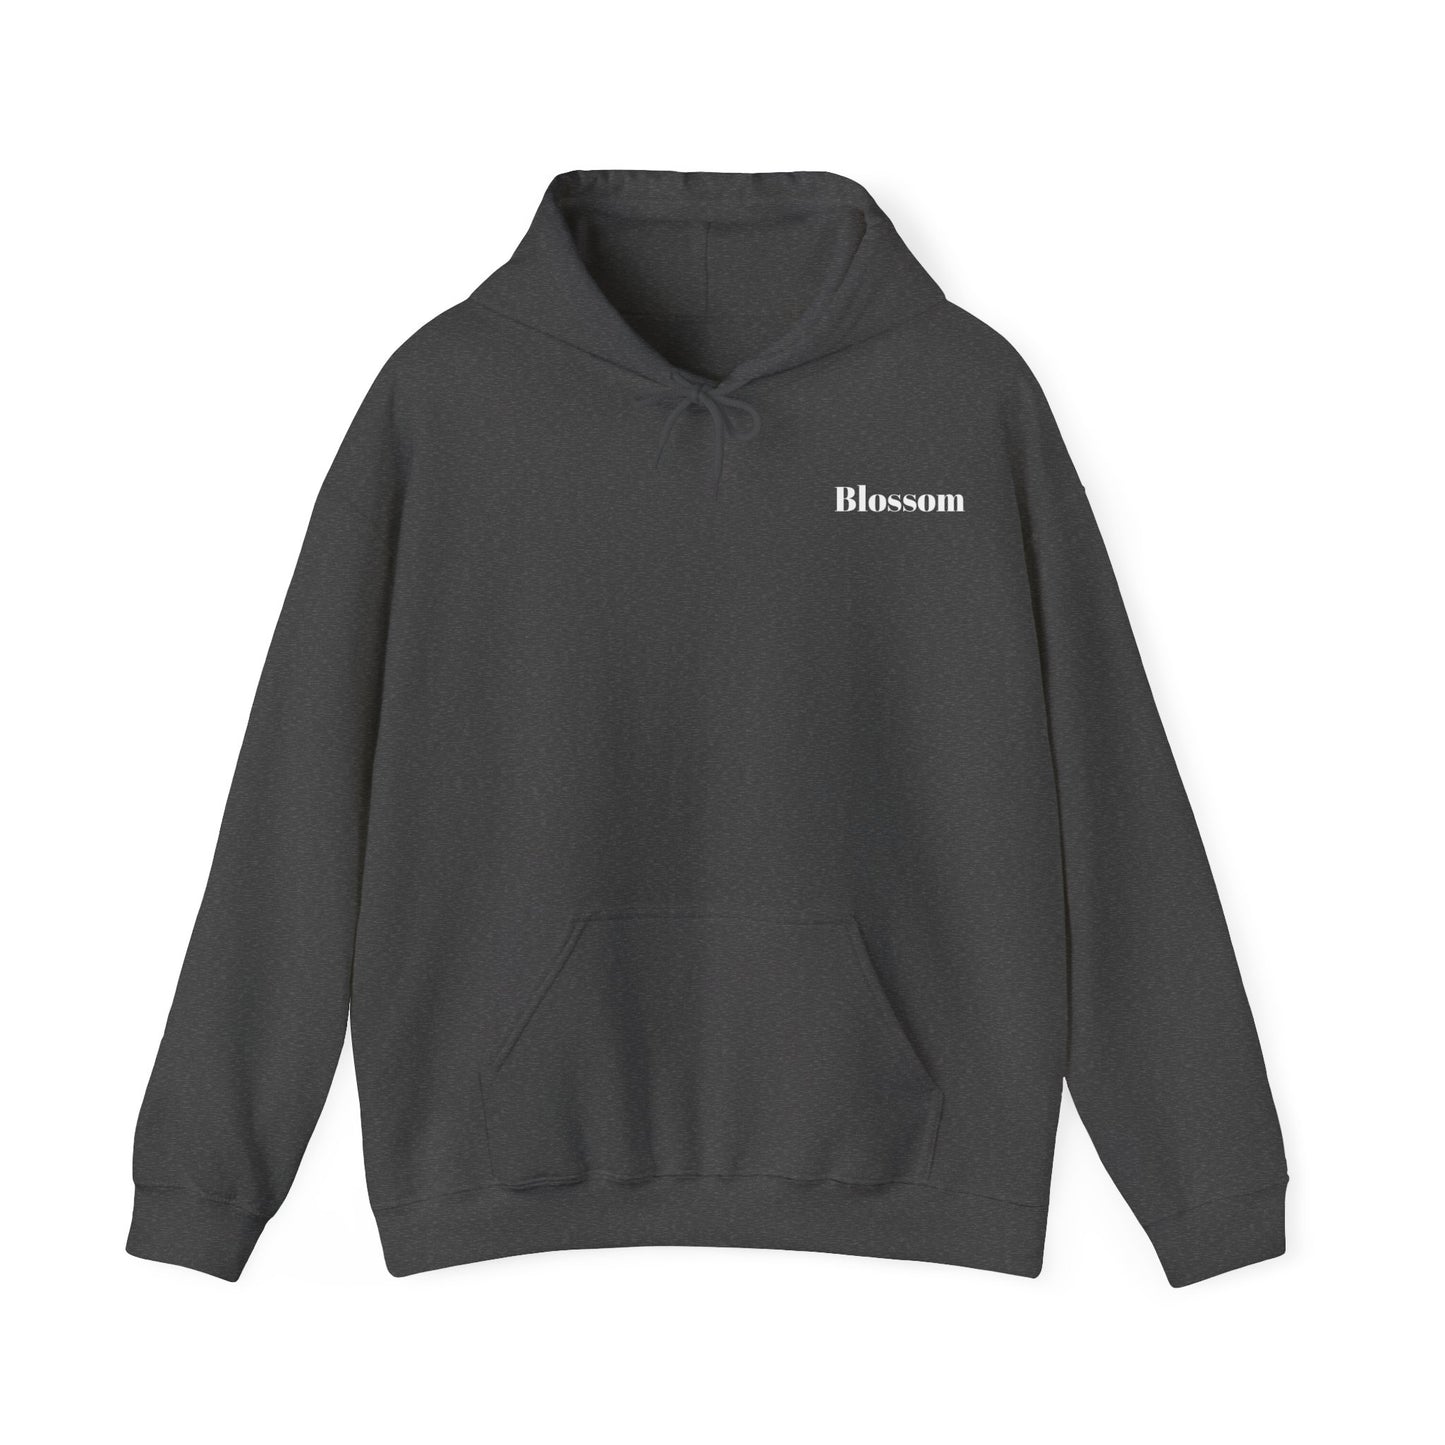 Blossom Unisex Hooded Sweatshirt with Heavy Blend Fabric6